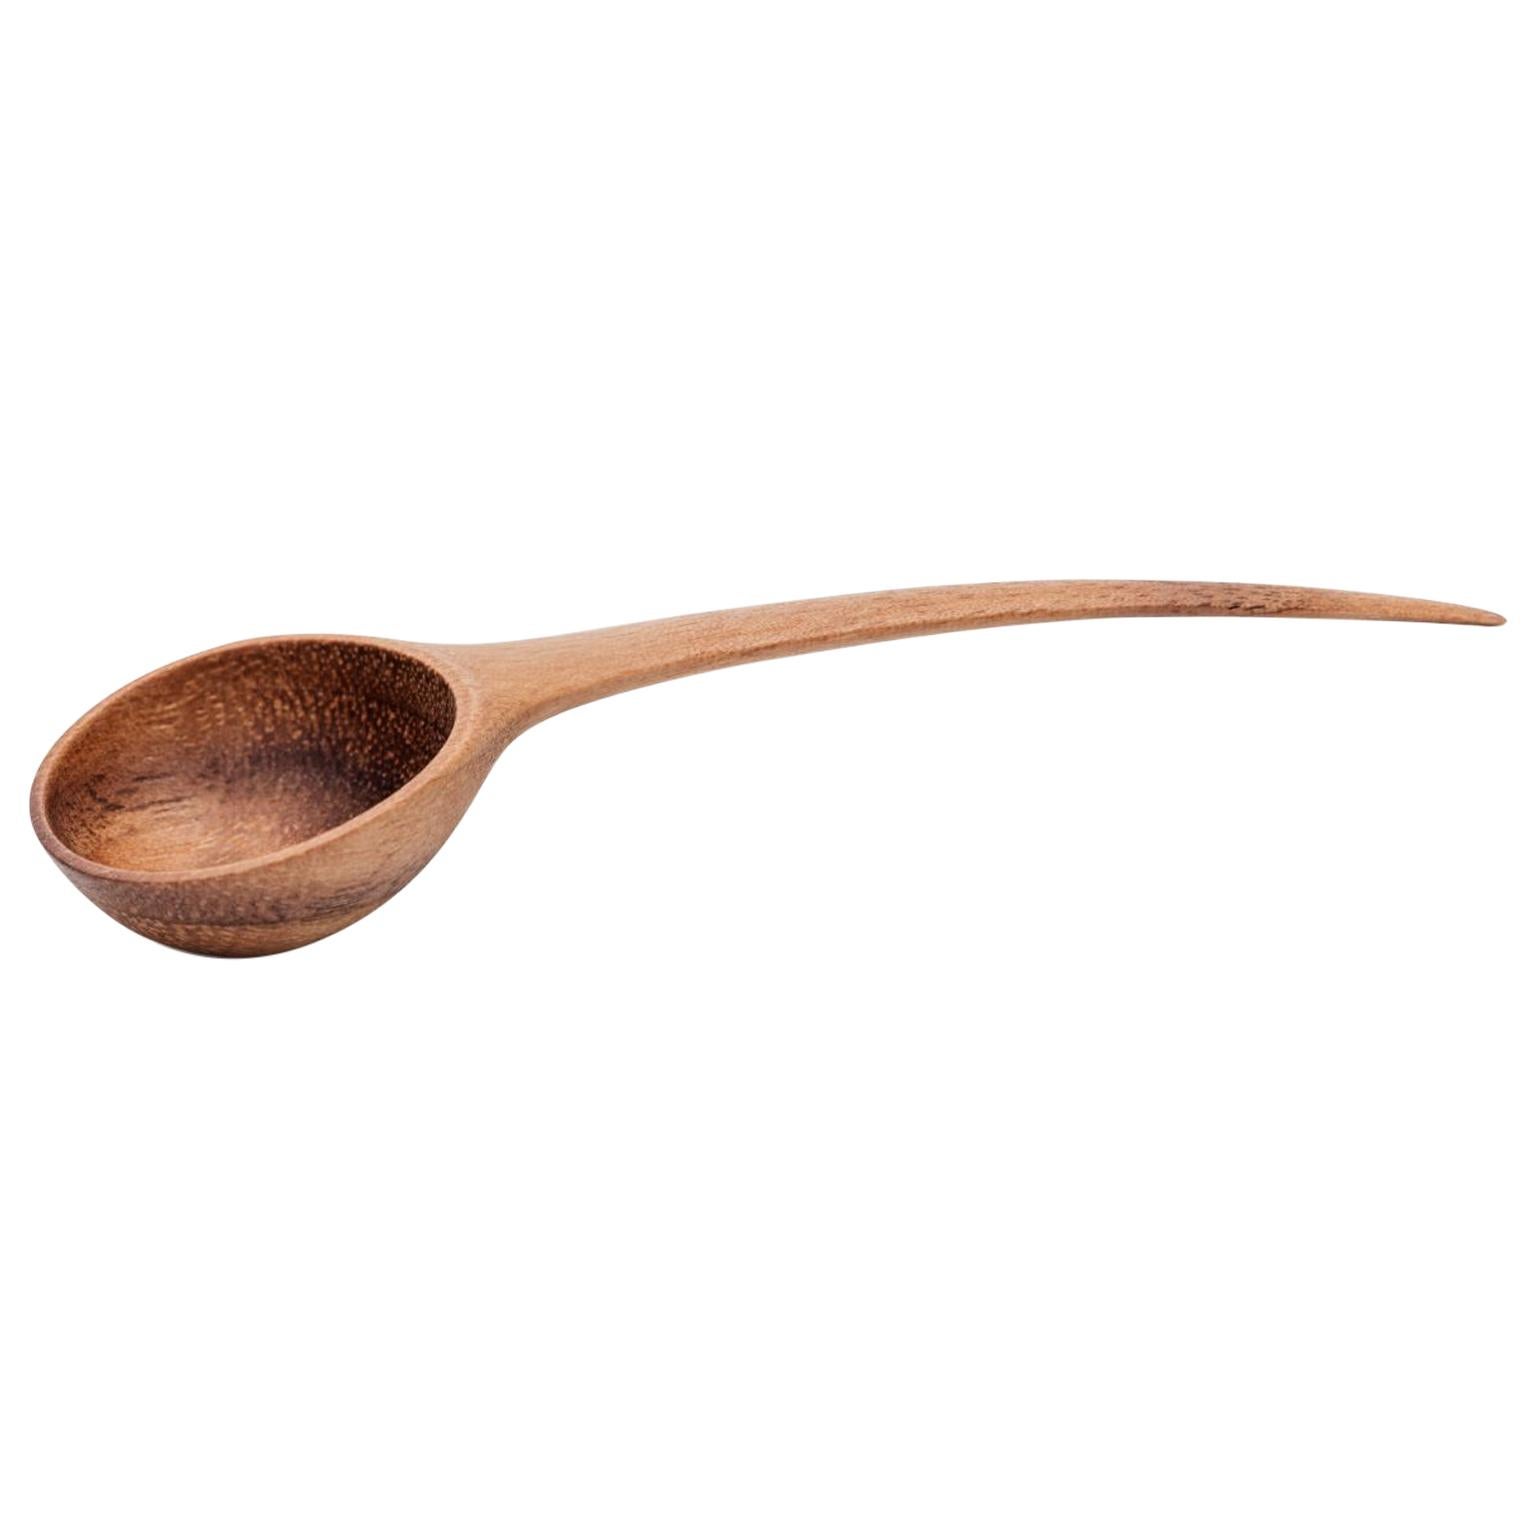 Pisara Spoon, Small by Antrei Hartikainen